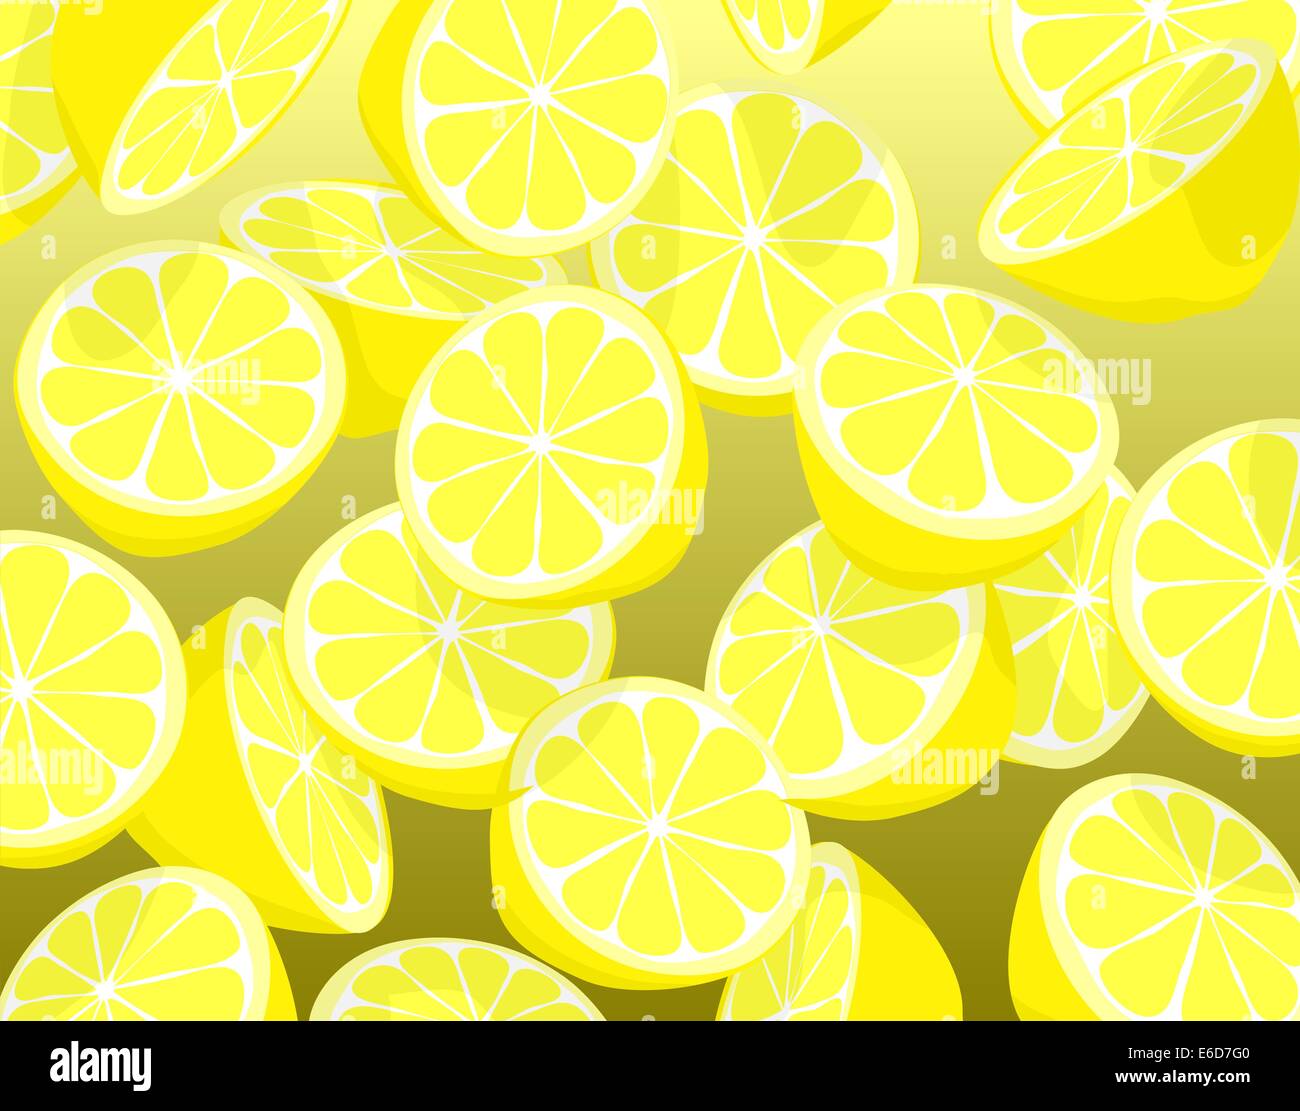 Bearbeitbares Vektor-Illustration des Fallens in Scheiben geschnittenen Zitronen Stock Vektor